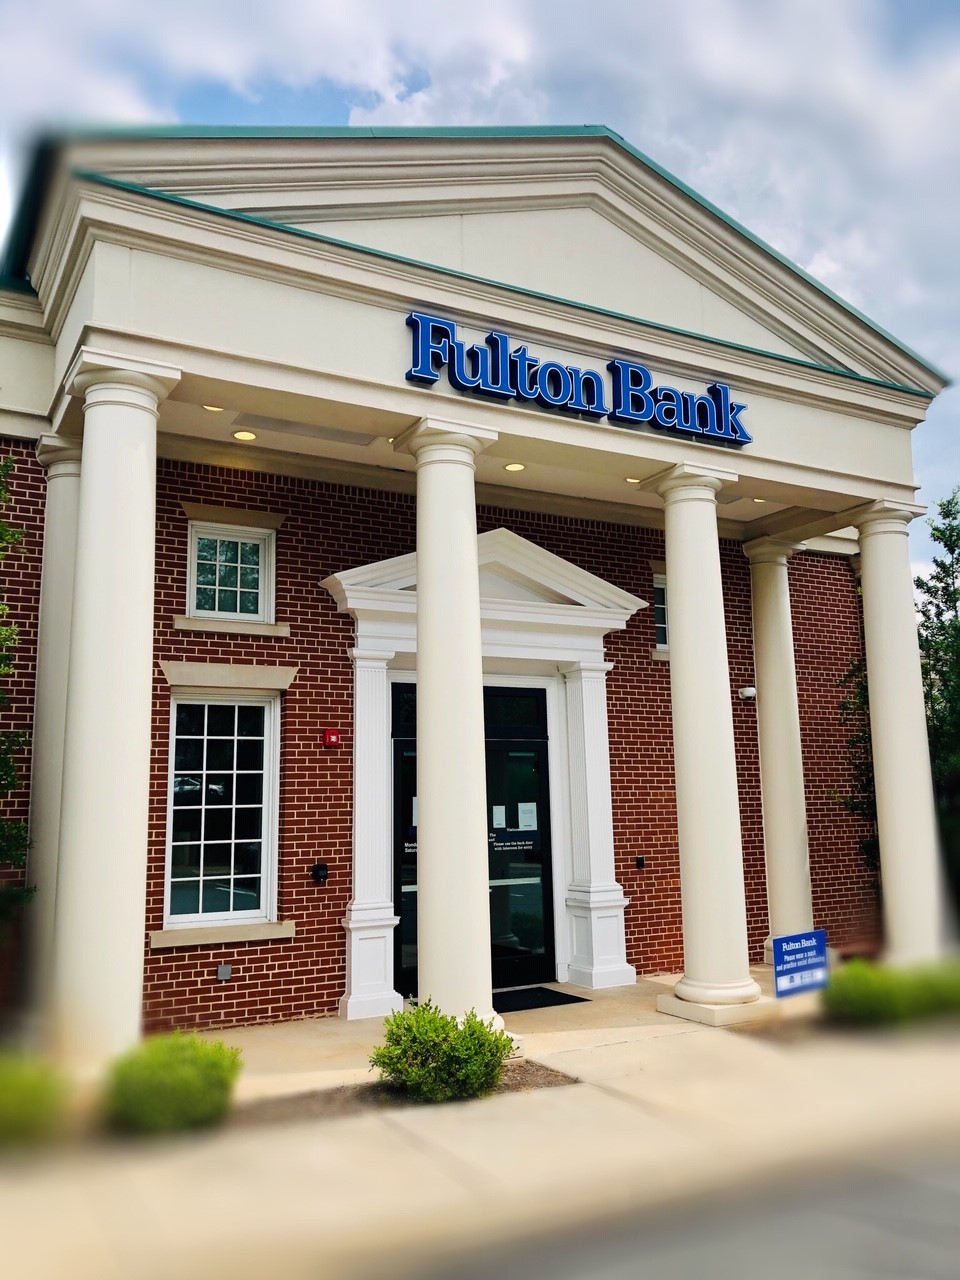 Fulton Bank